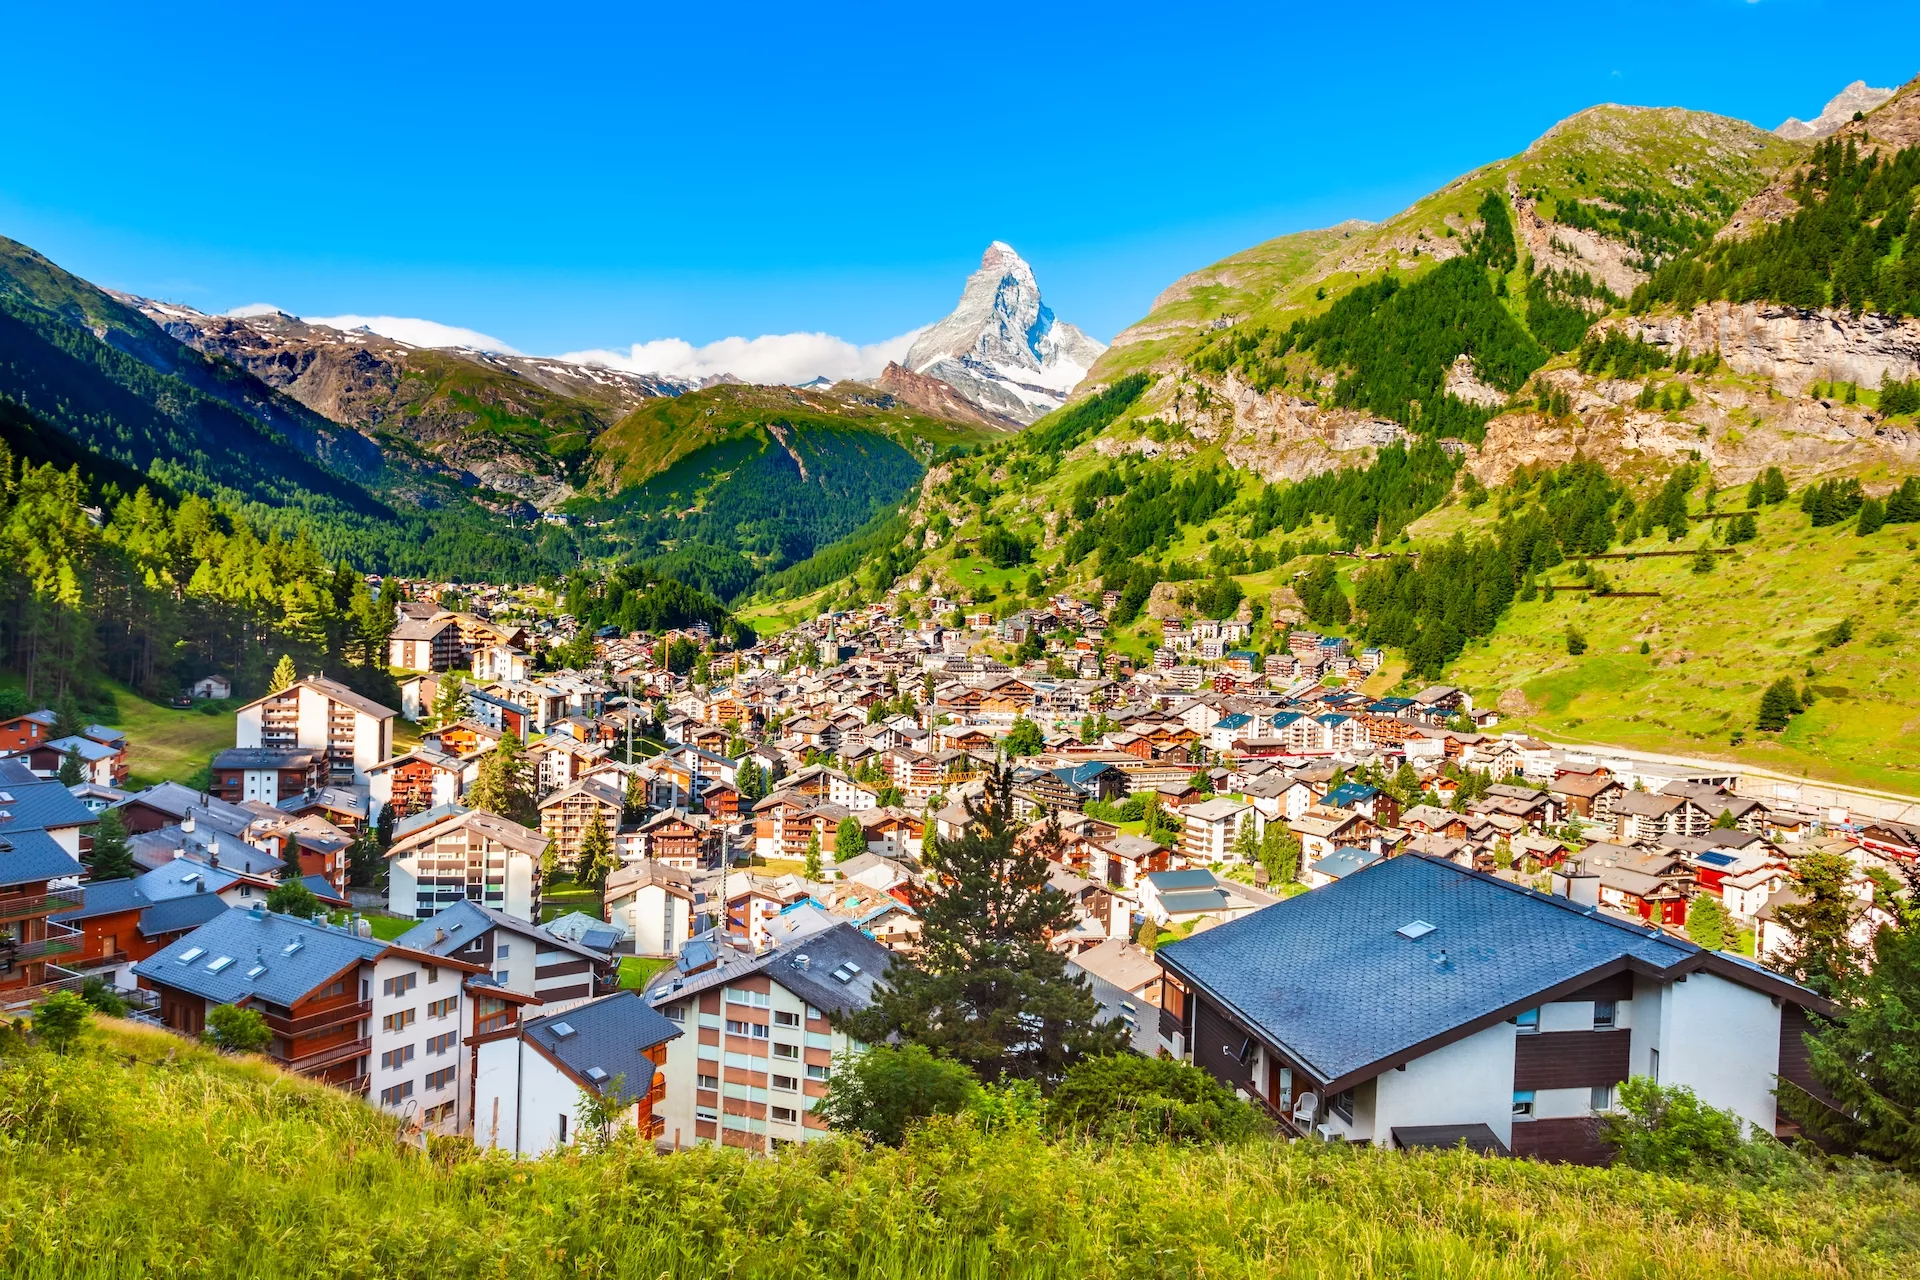 Zermatt by og Matterhorn-fjellet